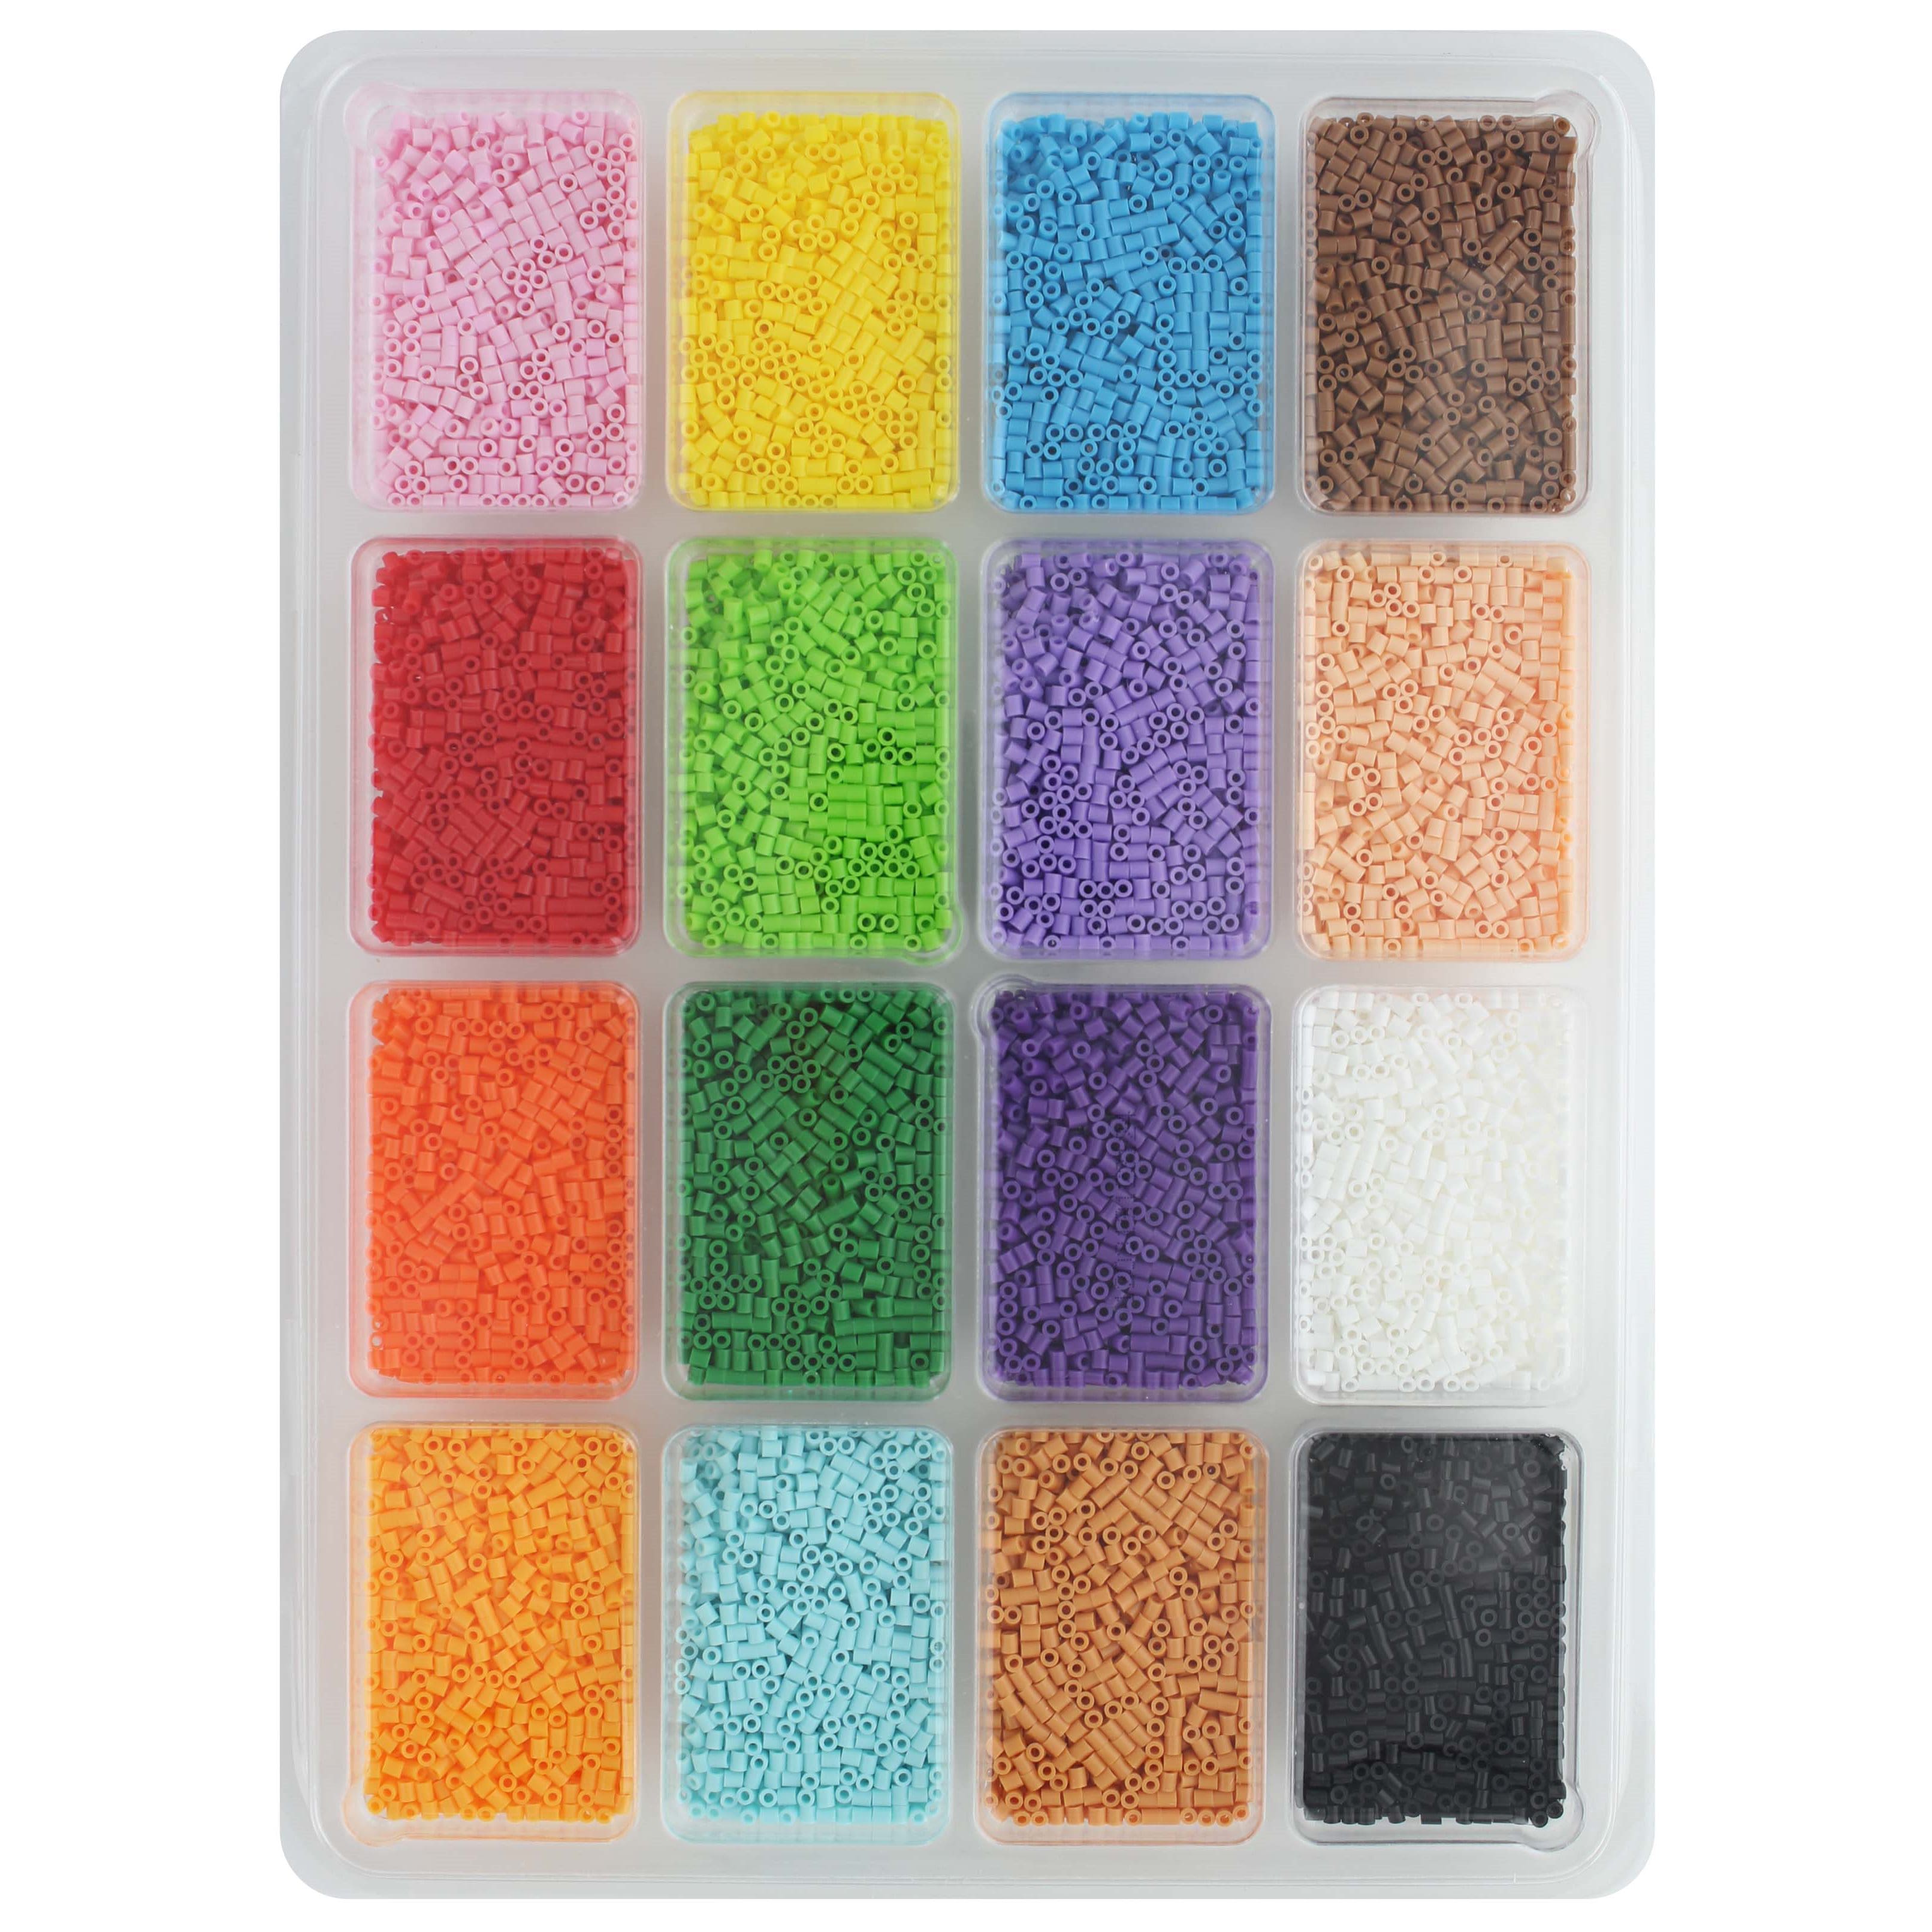 Perler® Summer Fused Mini Beads Large Tray, 16,000ct.